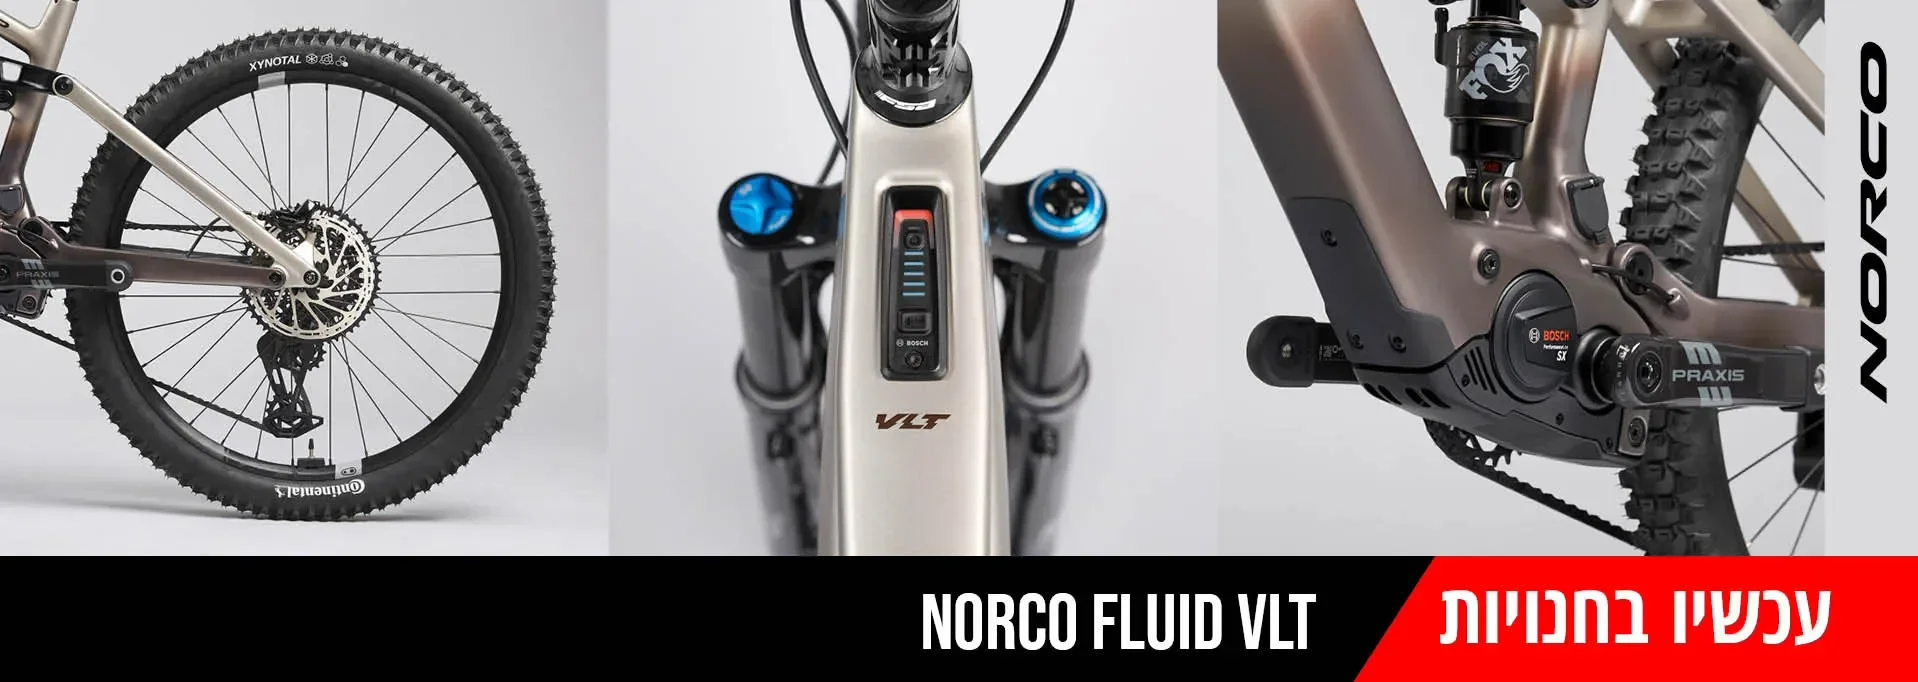 norco fluid vlt coming soon